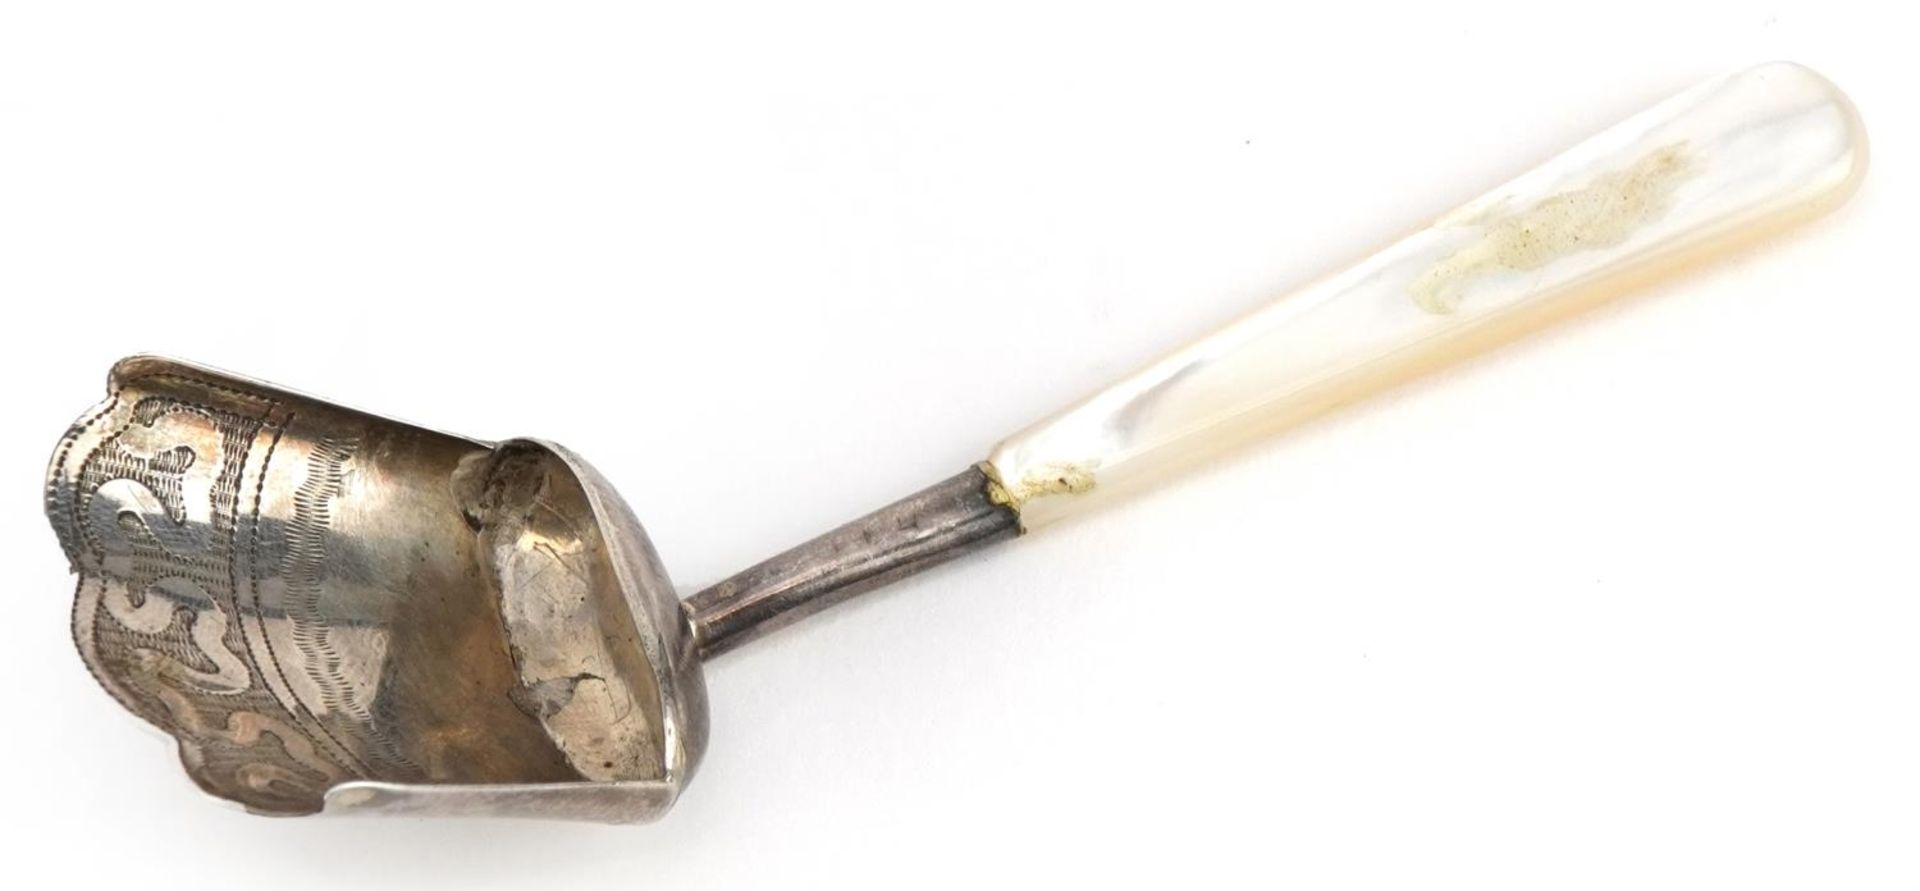 George III silver tea caddy spoon with mother of pearl handle, indistinct maker's mark, Birmingham